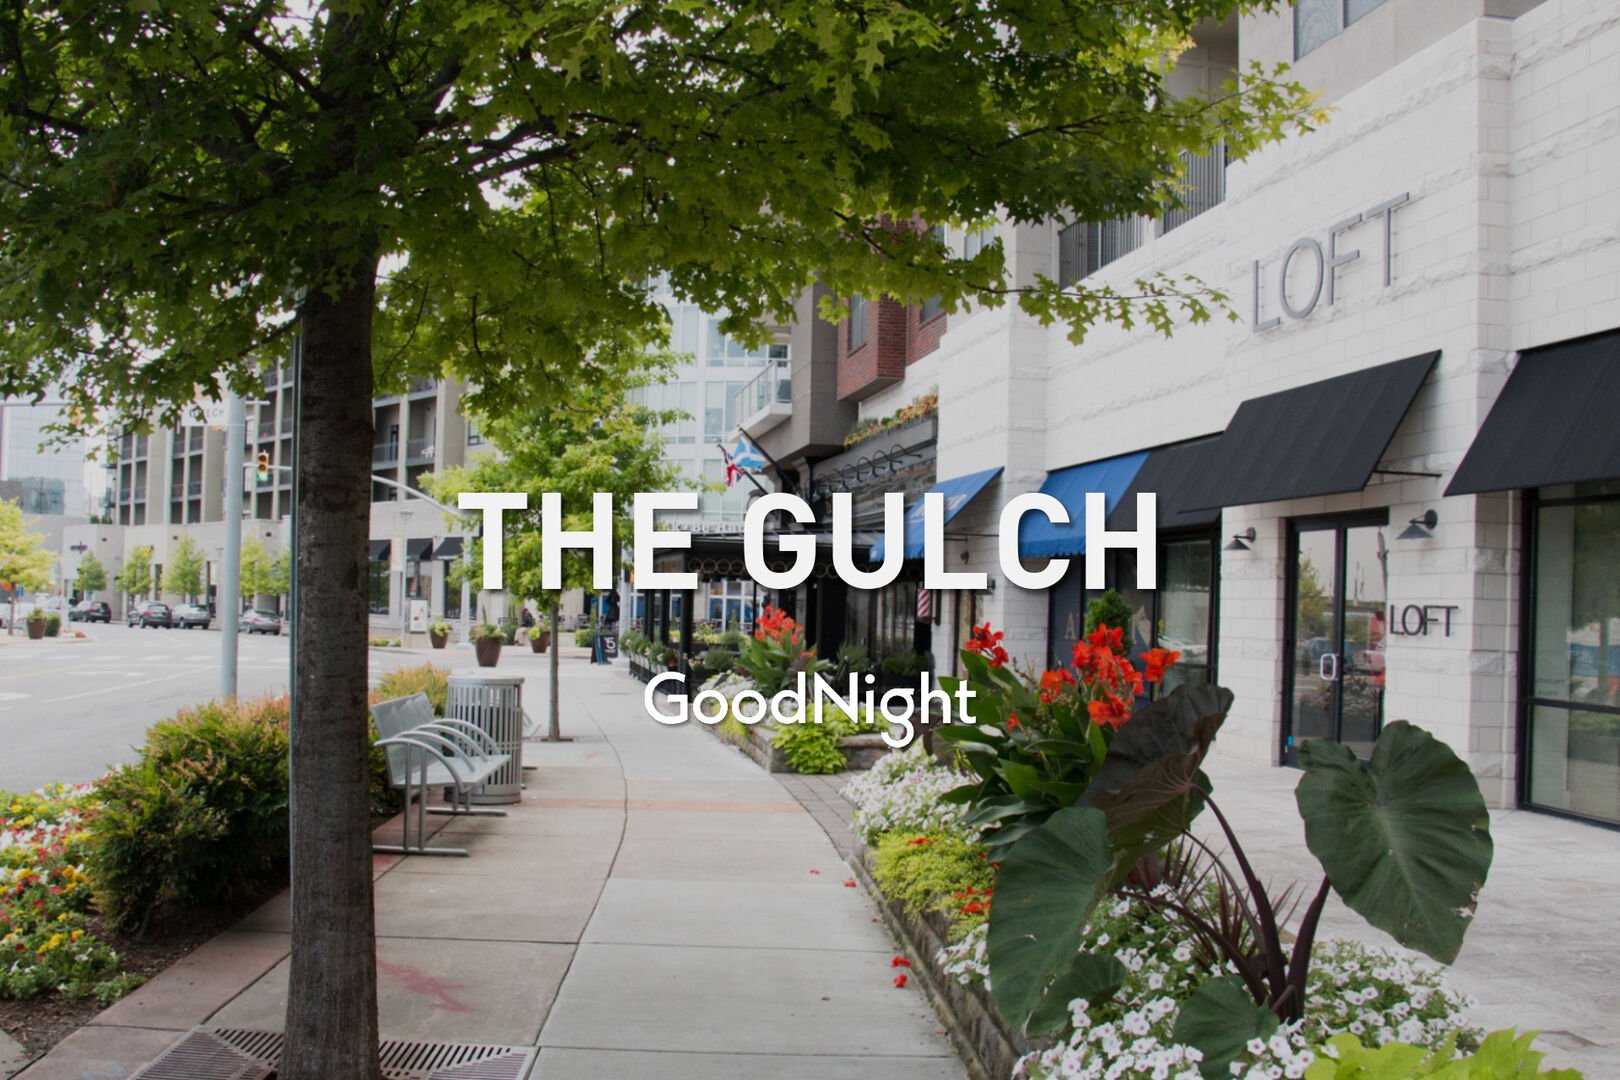 4 mins: The Gulch